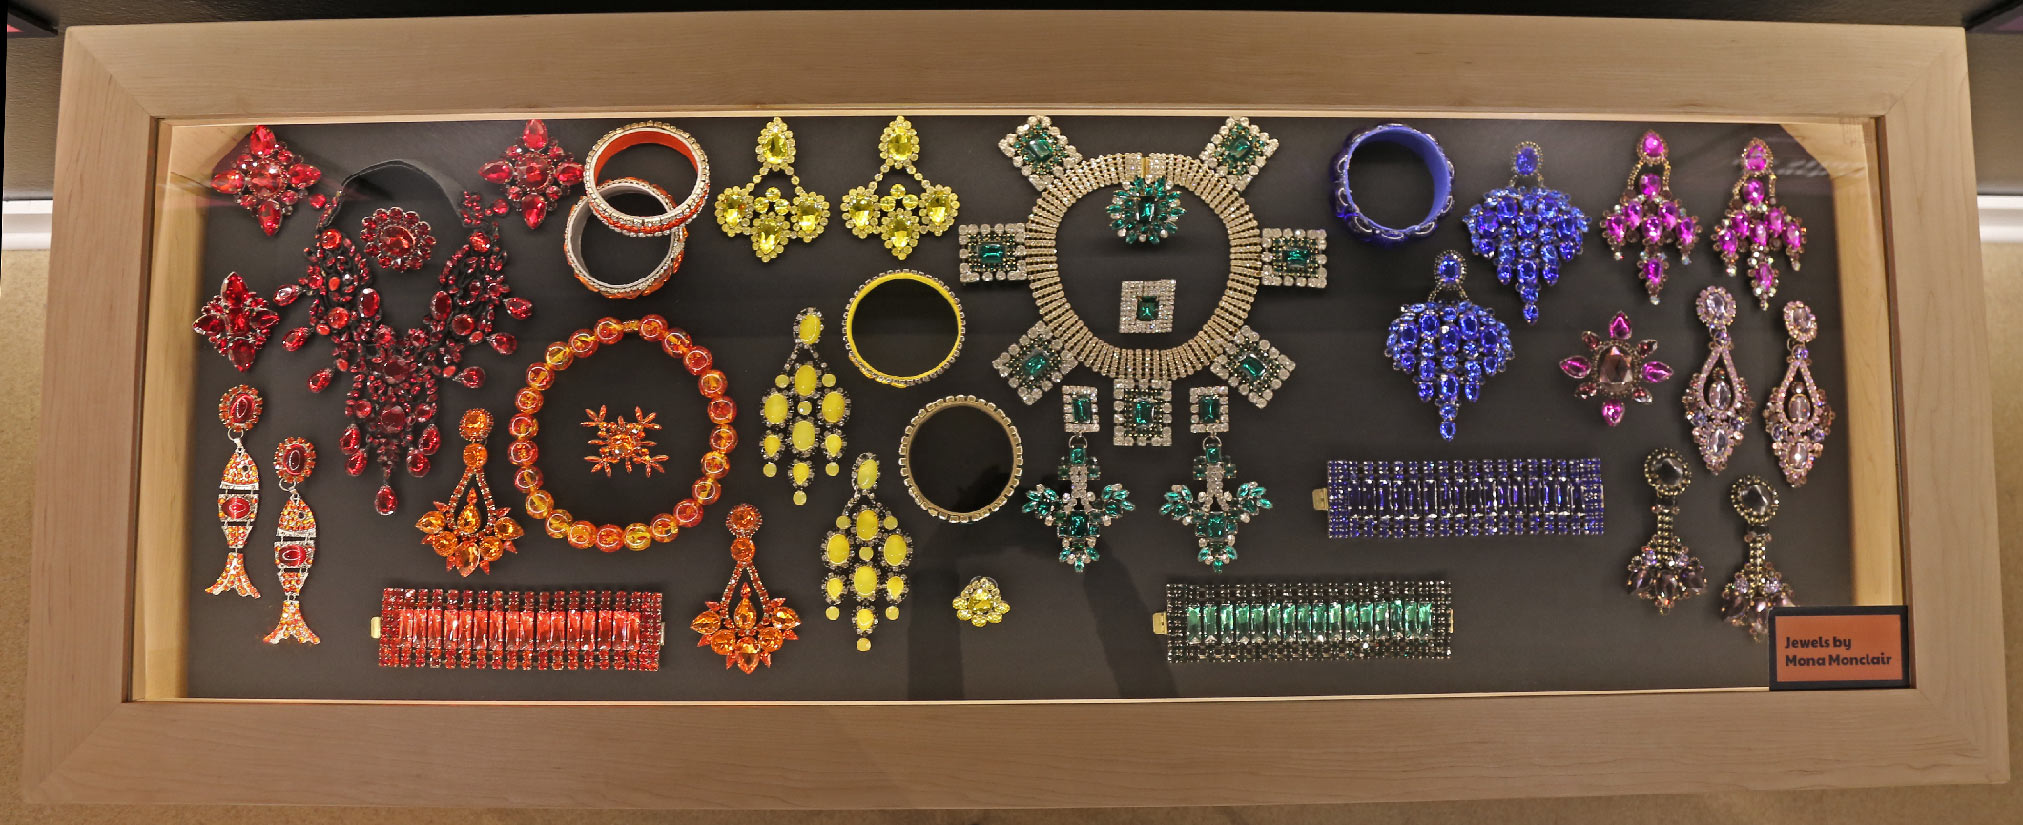 Rectangular Jewlery case displaying colorful pieces of jewlery